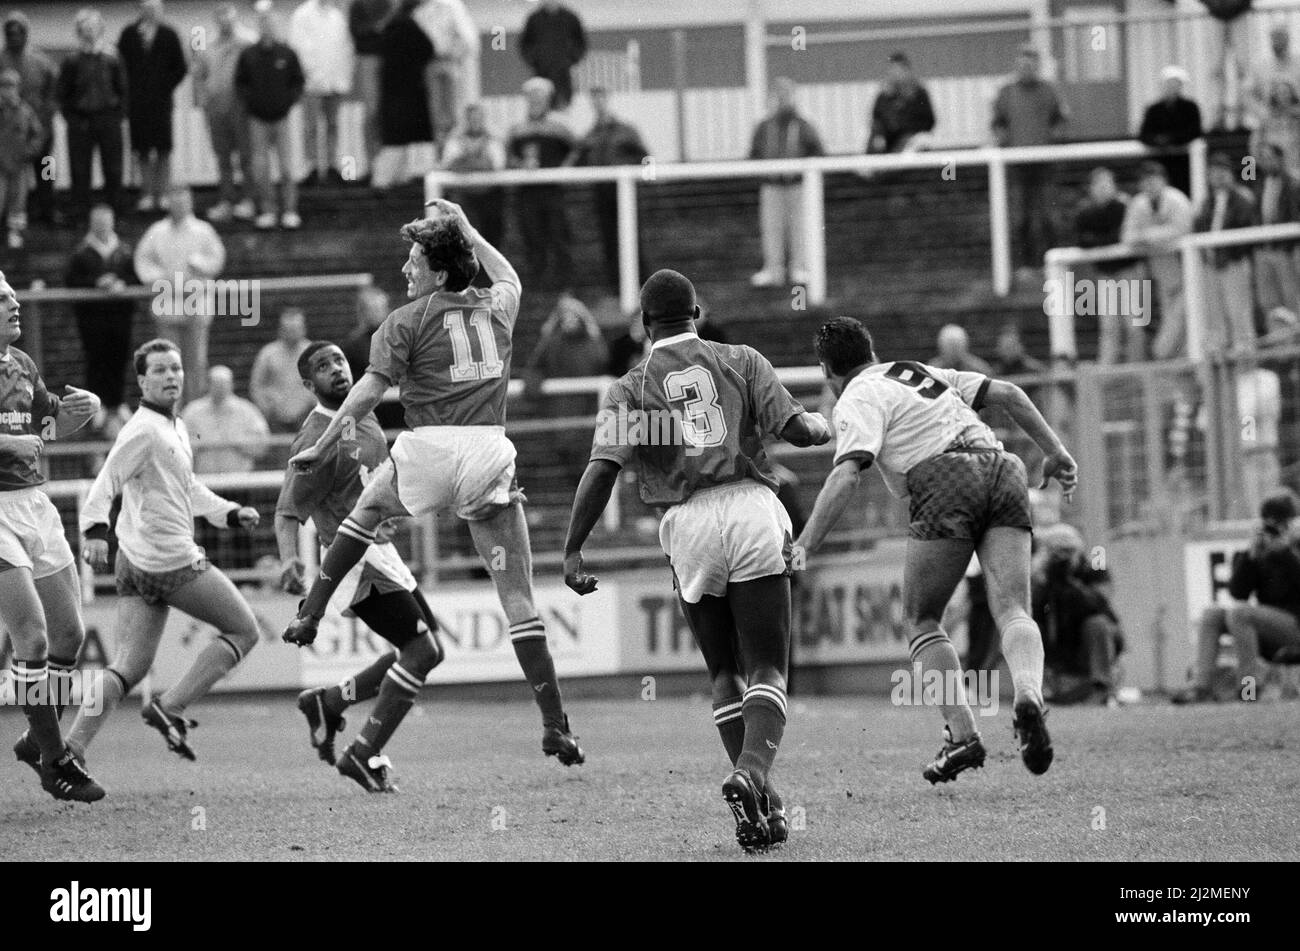 Reading v Bury, final score 1-0 to Reading. League Division Three. Elm Park. 20th April 1991. Stock Photo